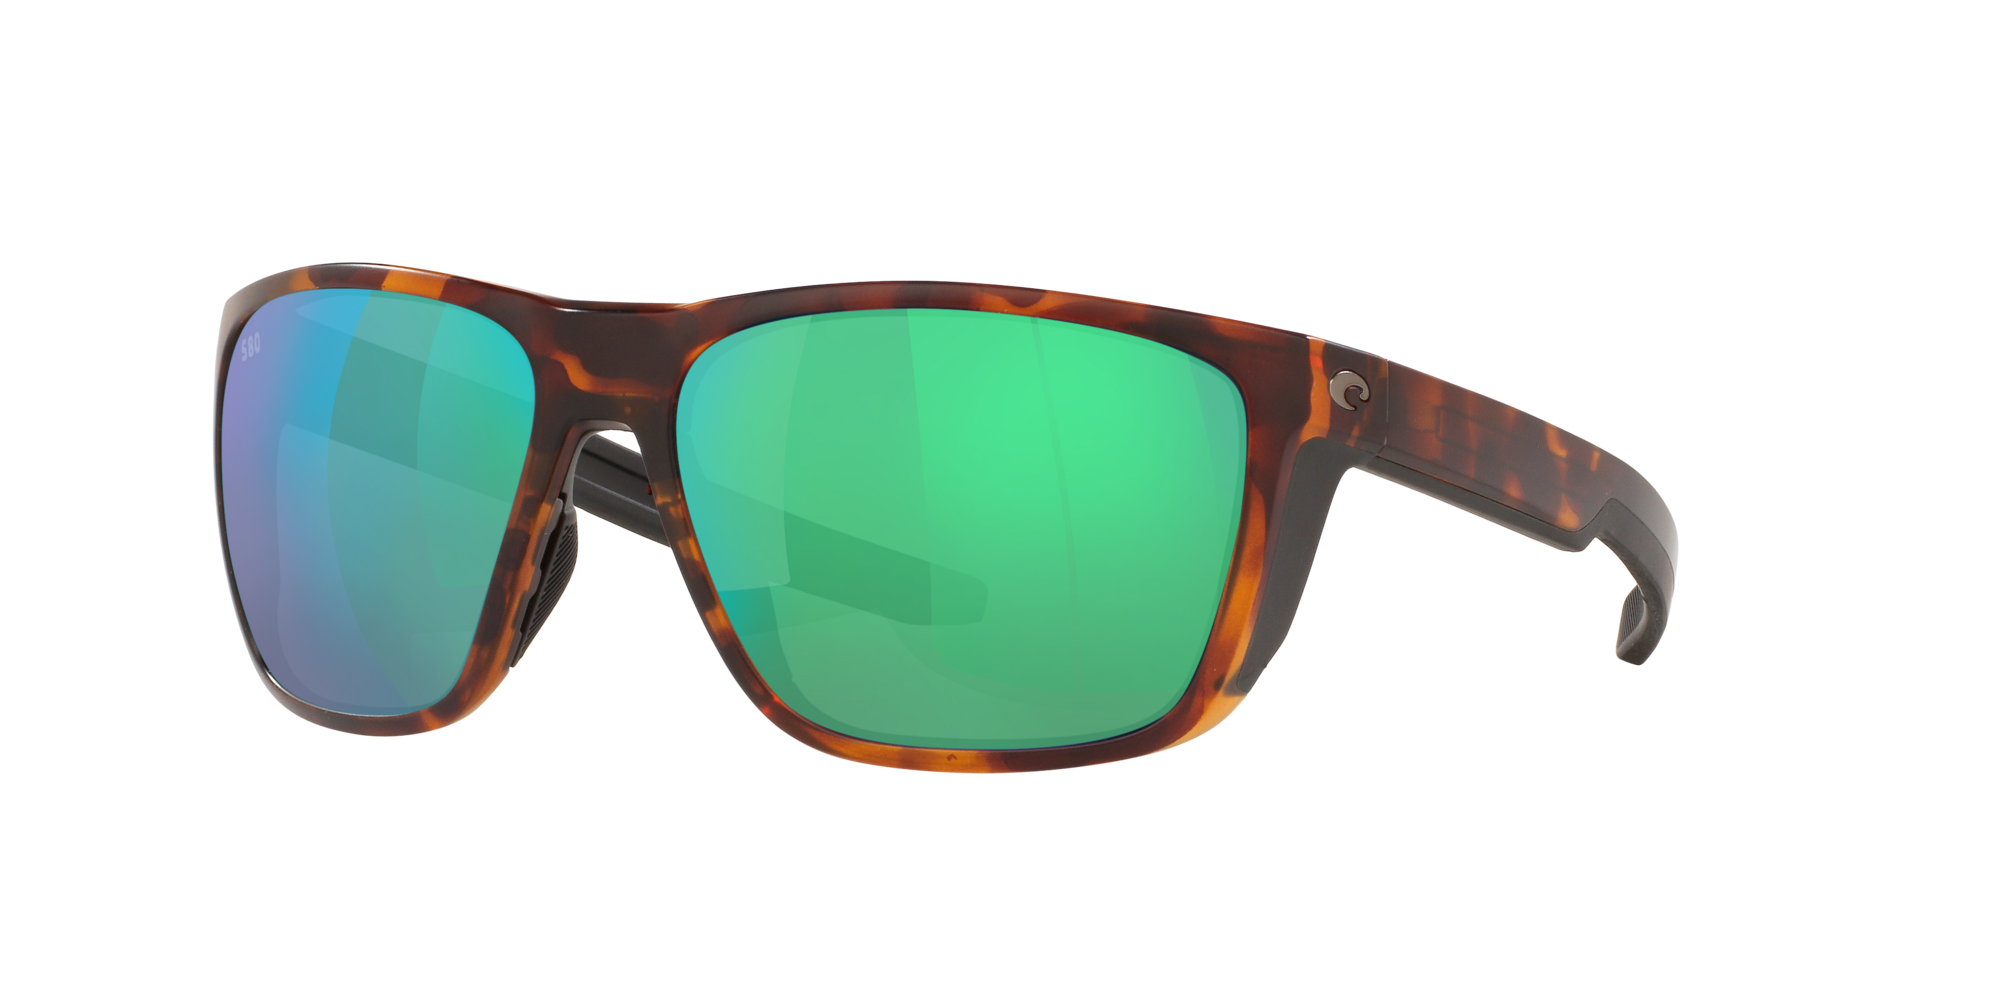 Costa Del Mar Sunglasses on Sale, 55% OFF | www.pegasusaerogroup.com